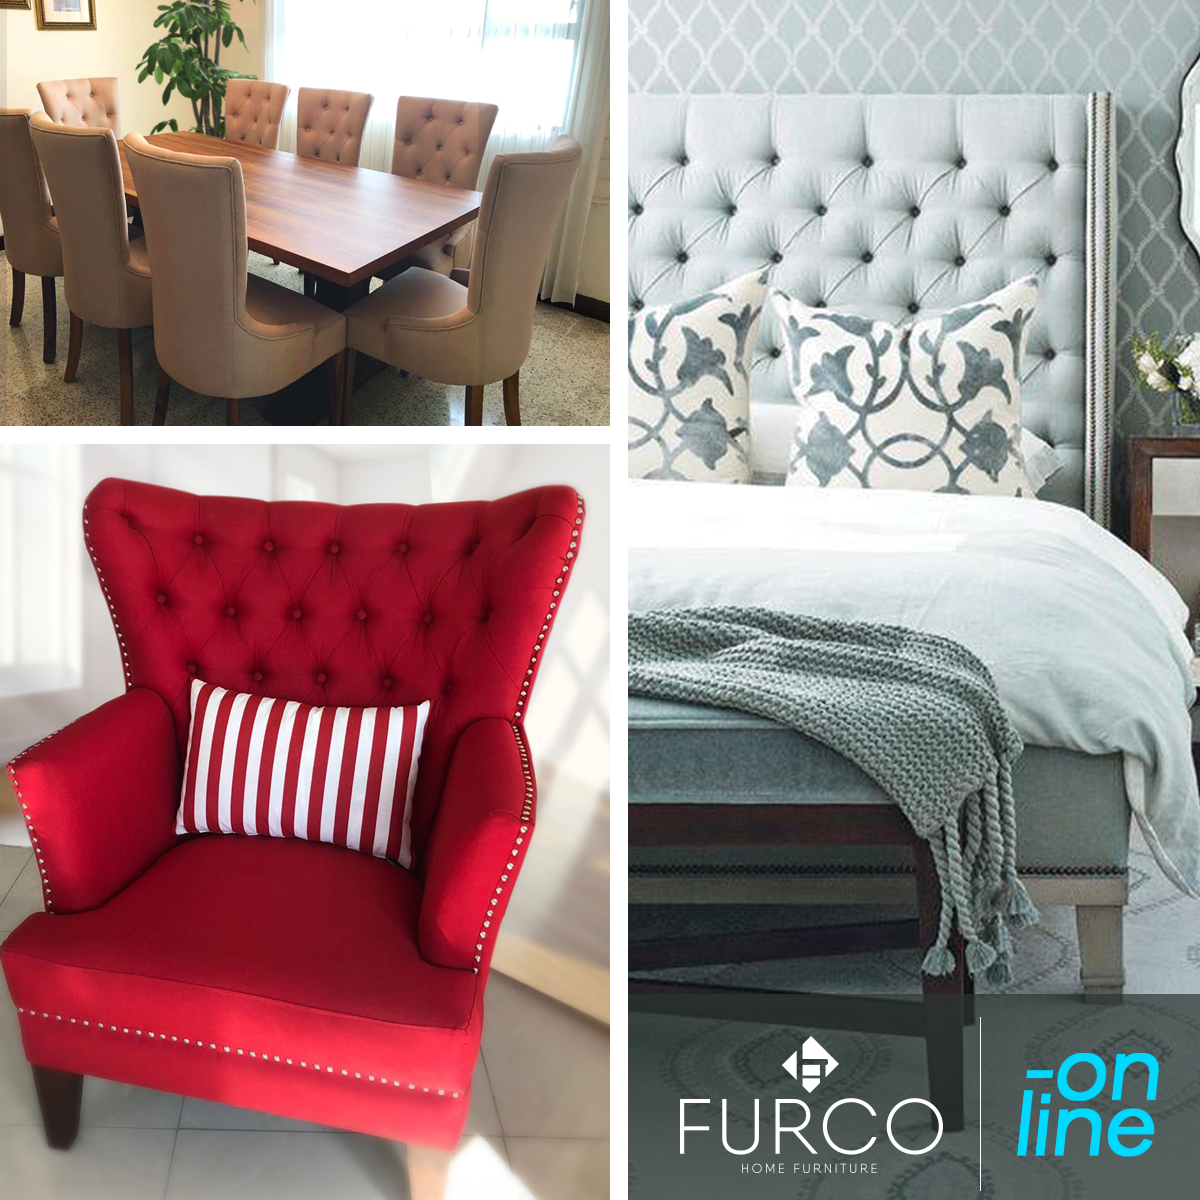 FURCO – Furniture Company | FURCO